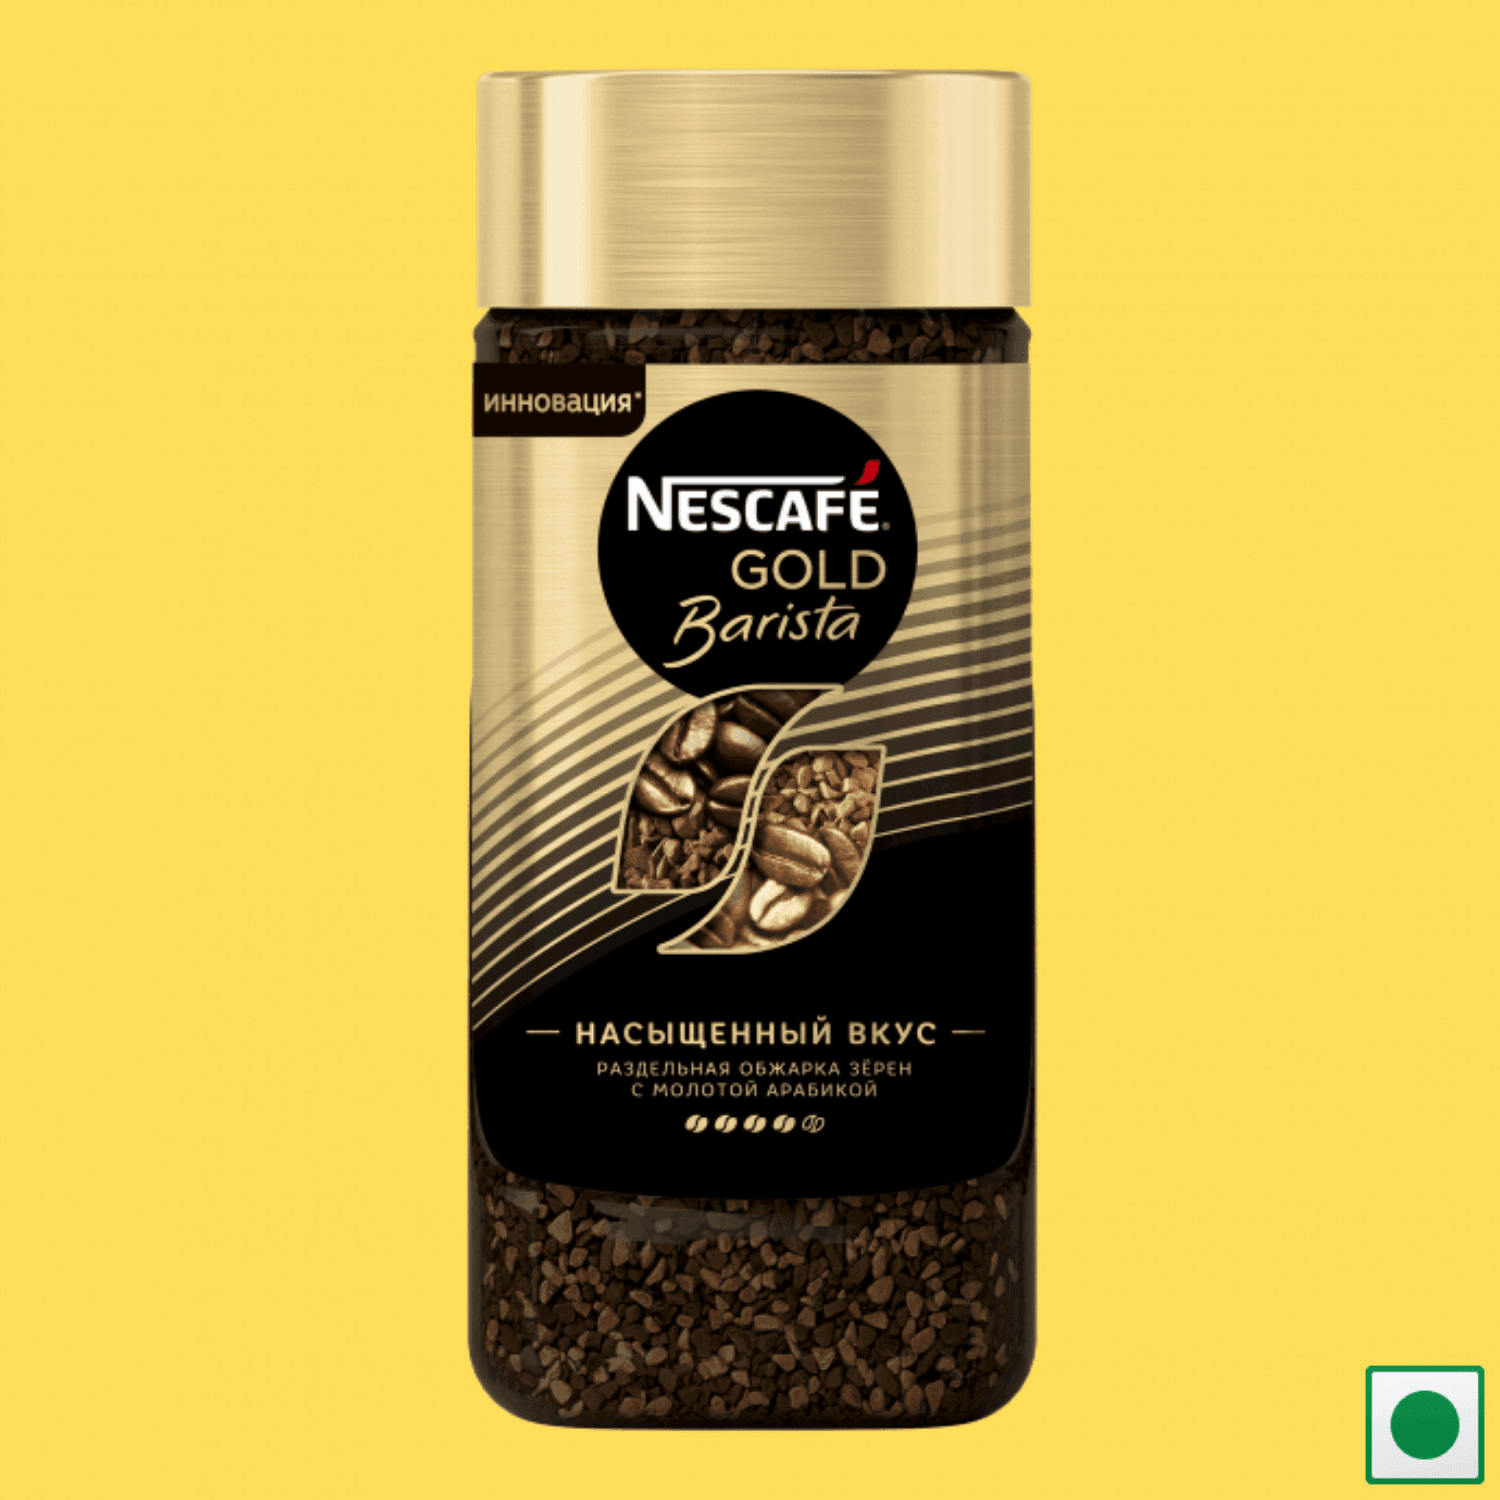 Nescafe Gold Barista, 85g (Imported) - Super 7 Mart